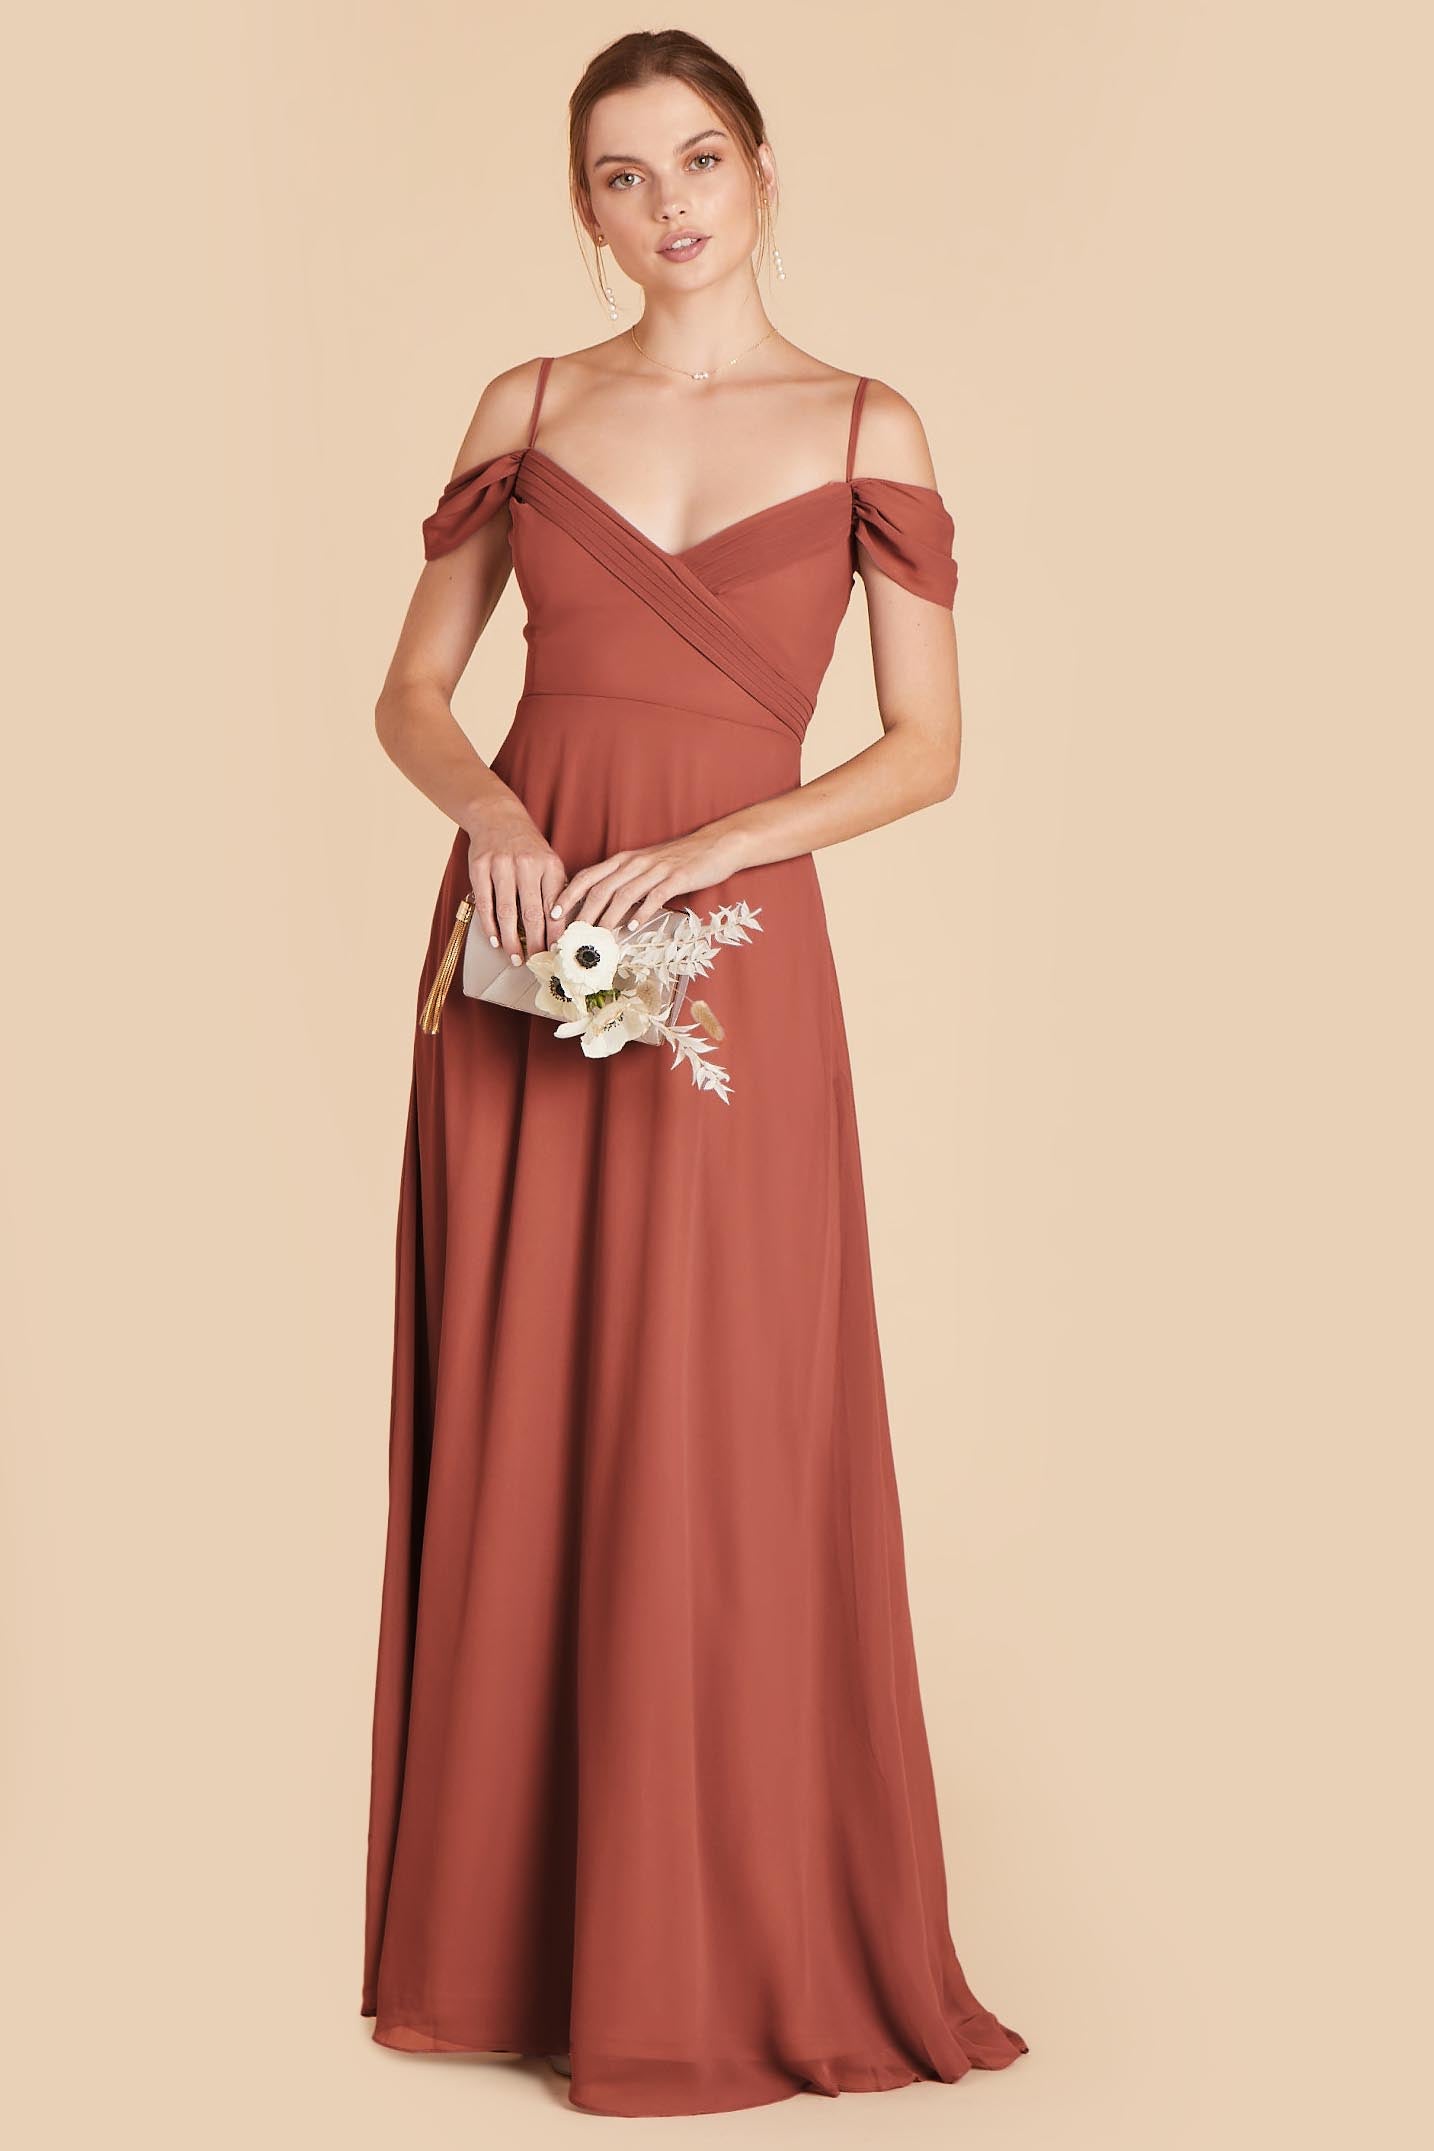 Desert Rose Spence Convertible Dress by Birdy Grey